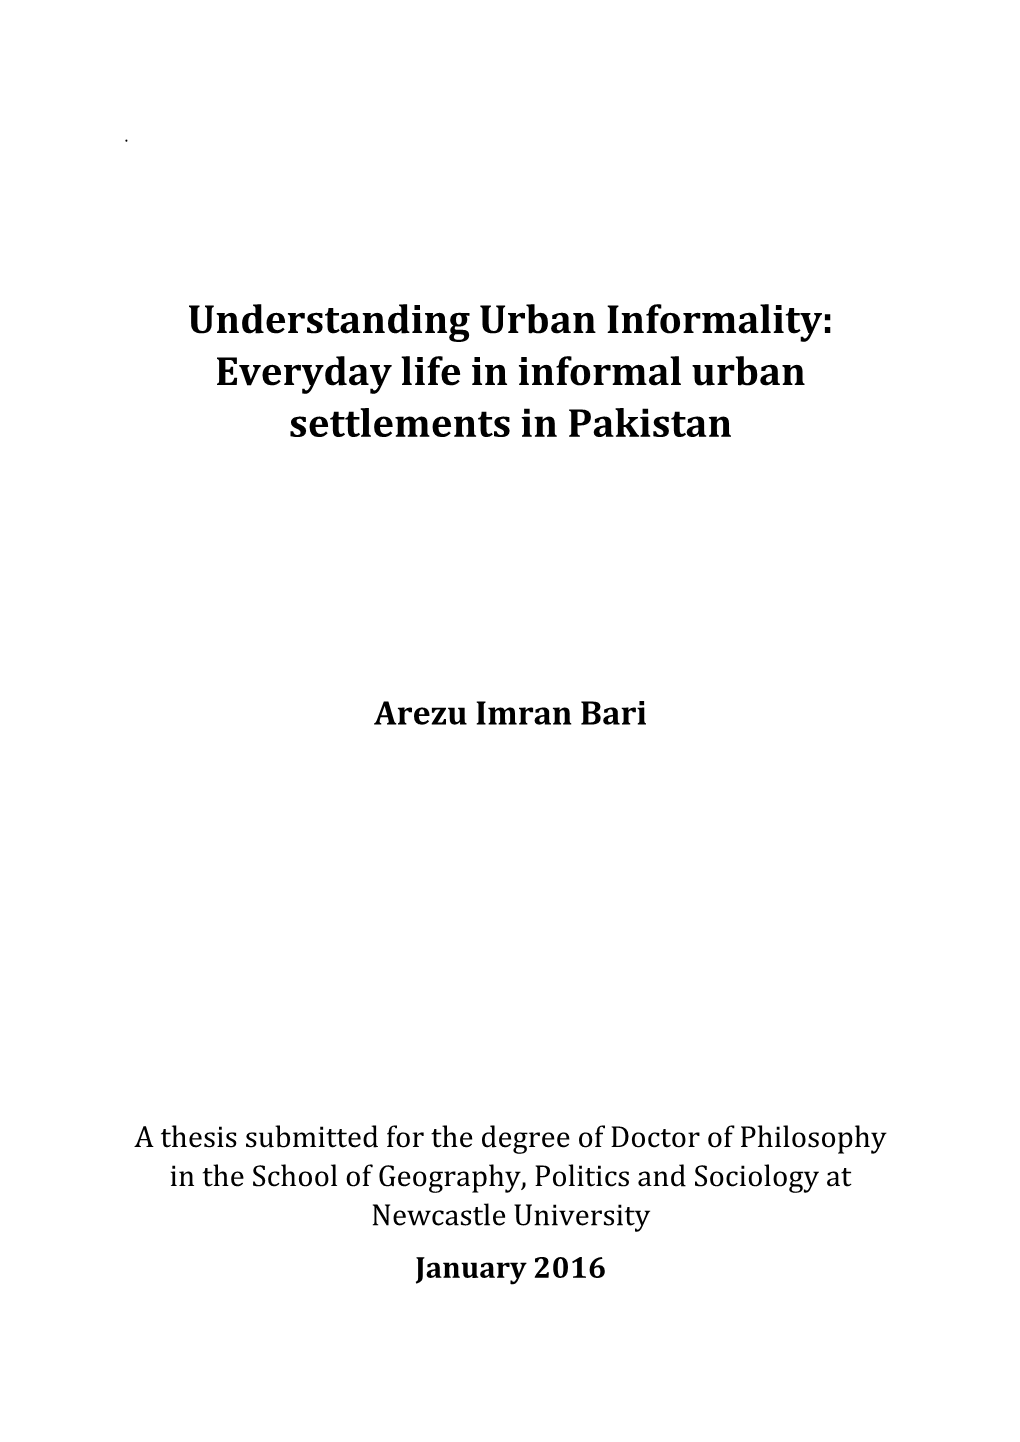 Everyday Life in Informal Urban Settlements in Pakistan